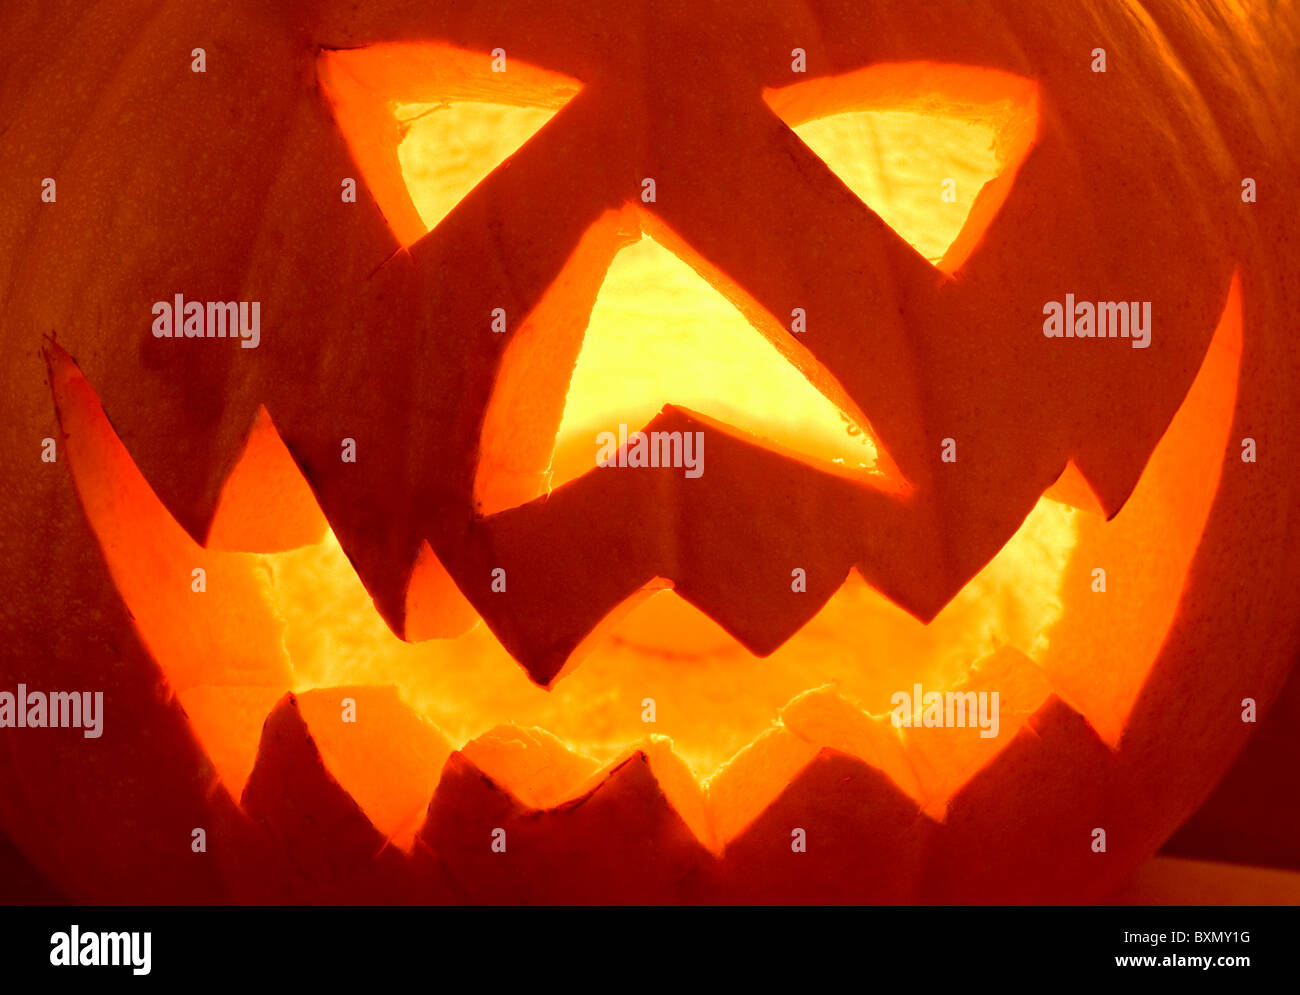 Cara de calabaza de Halloween iluminado Foto de stock